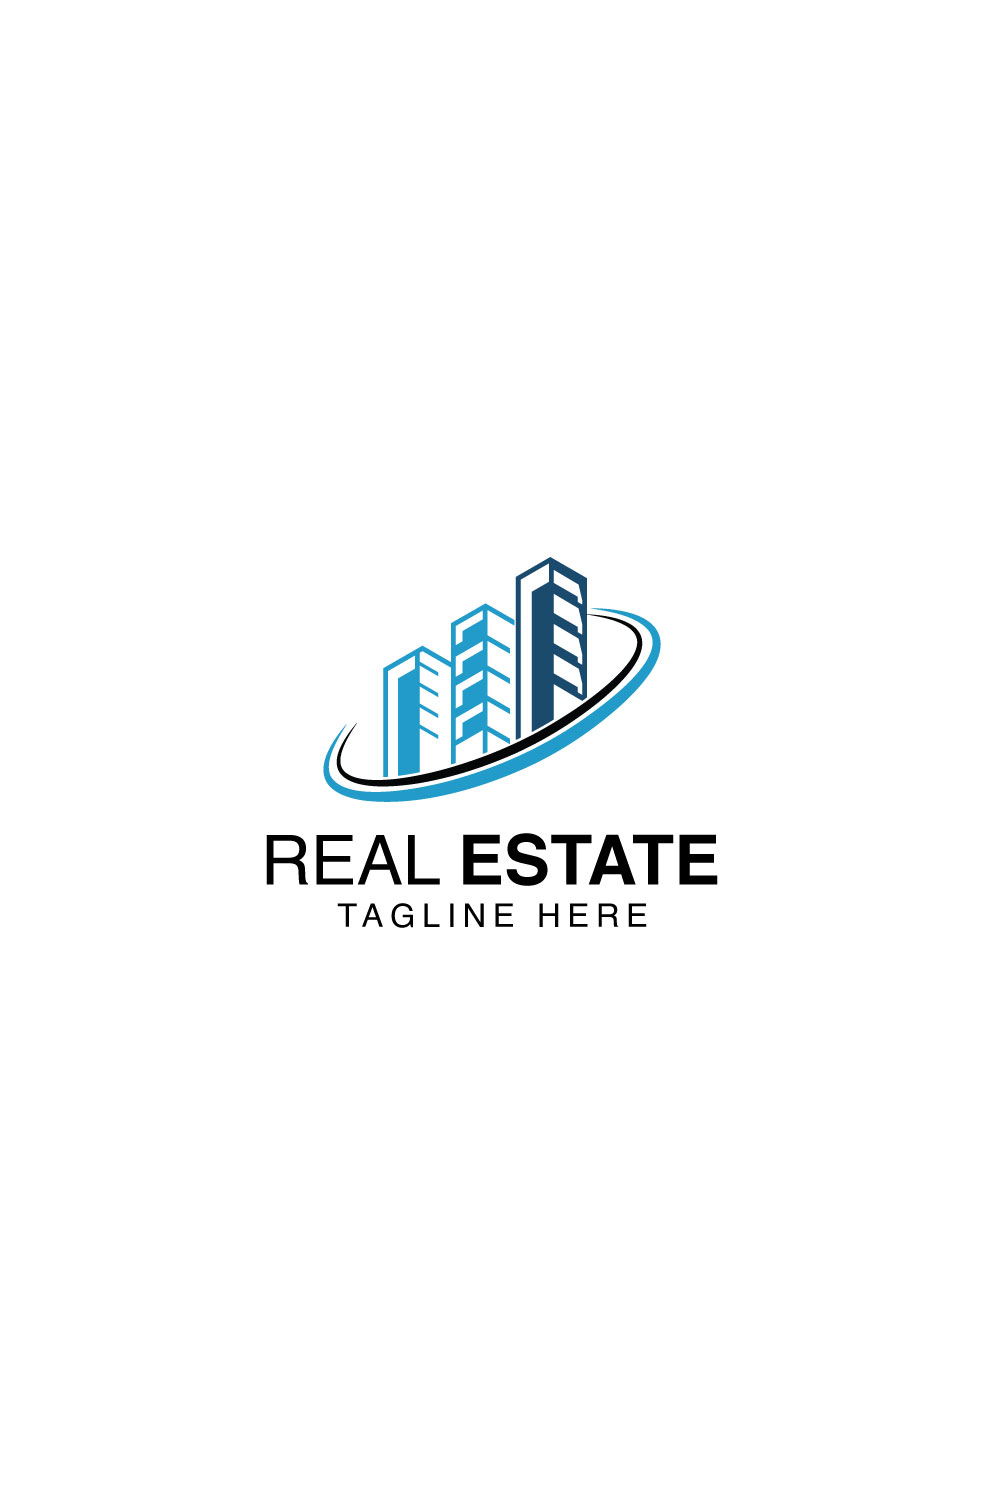 Real Estate Vector Logo Design pinterest preview image.